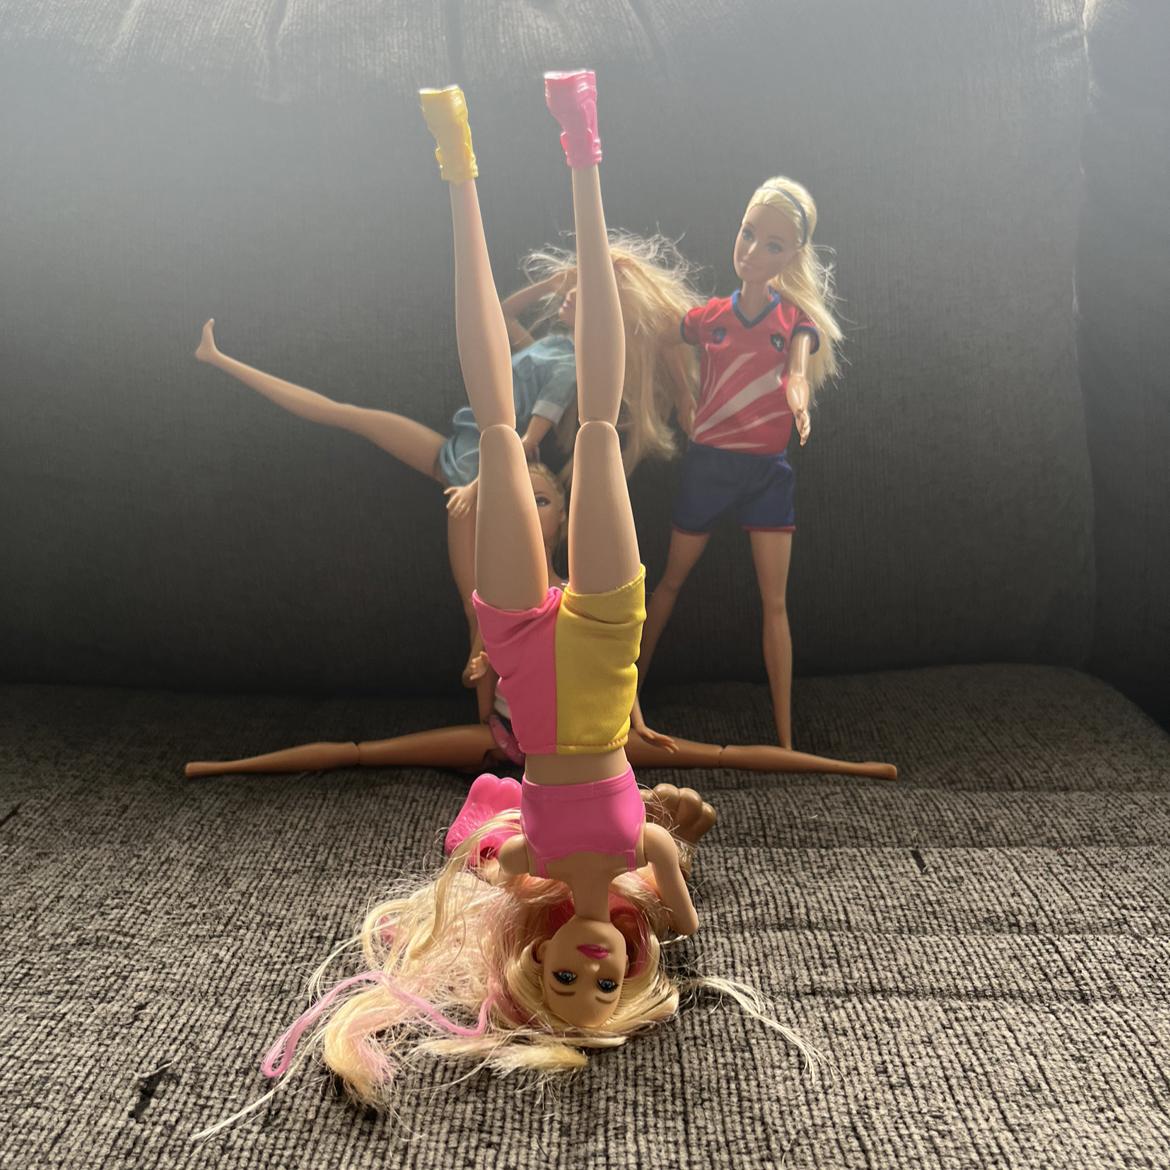 Barbie team